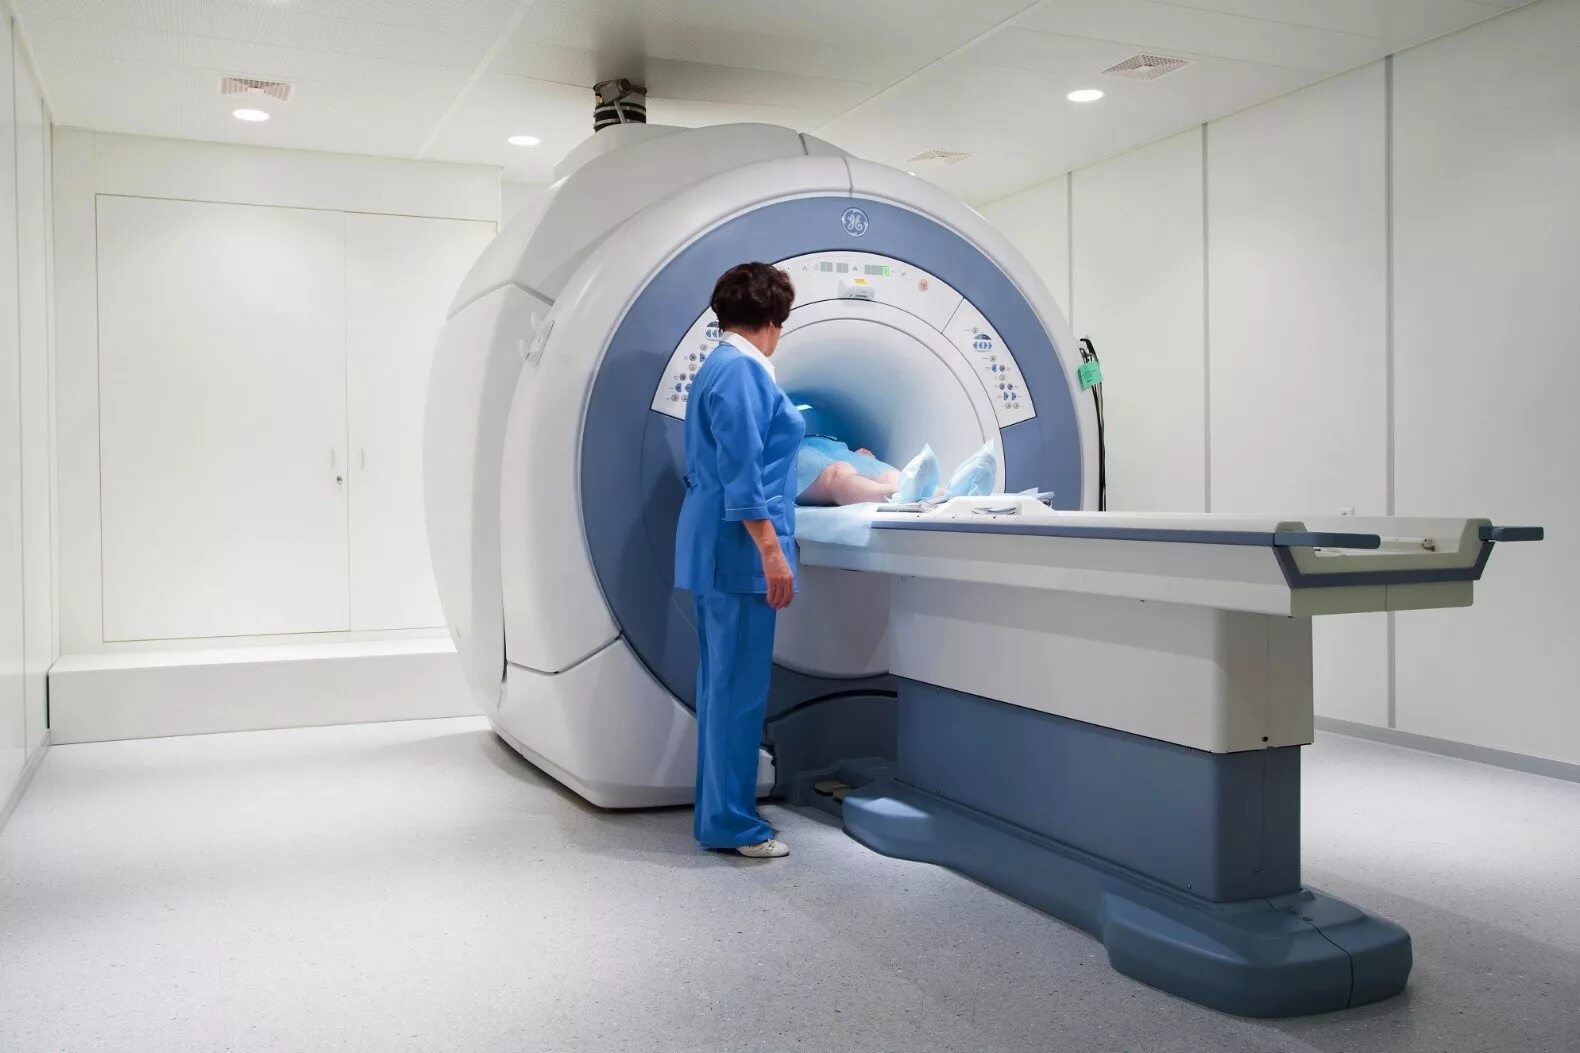 Мрт какая одежда. Мрт магнитно-резонансная томография головного мозга. Магнито-резонансная томография. Магнито-резонансный томограф. Магниторезонансная томография (мрт).